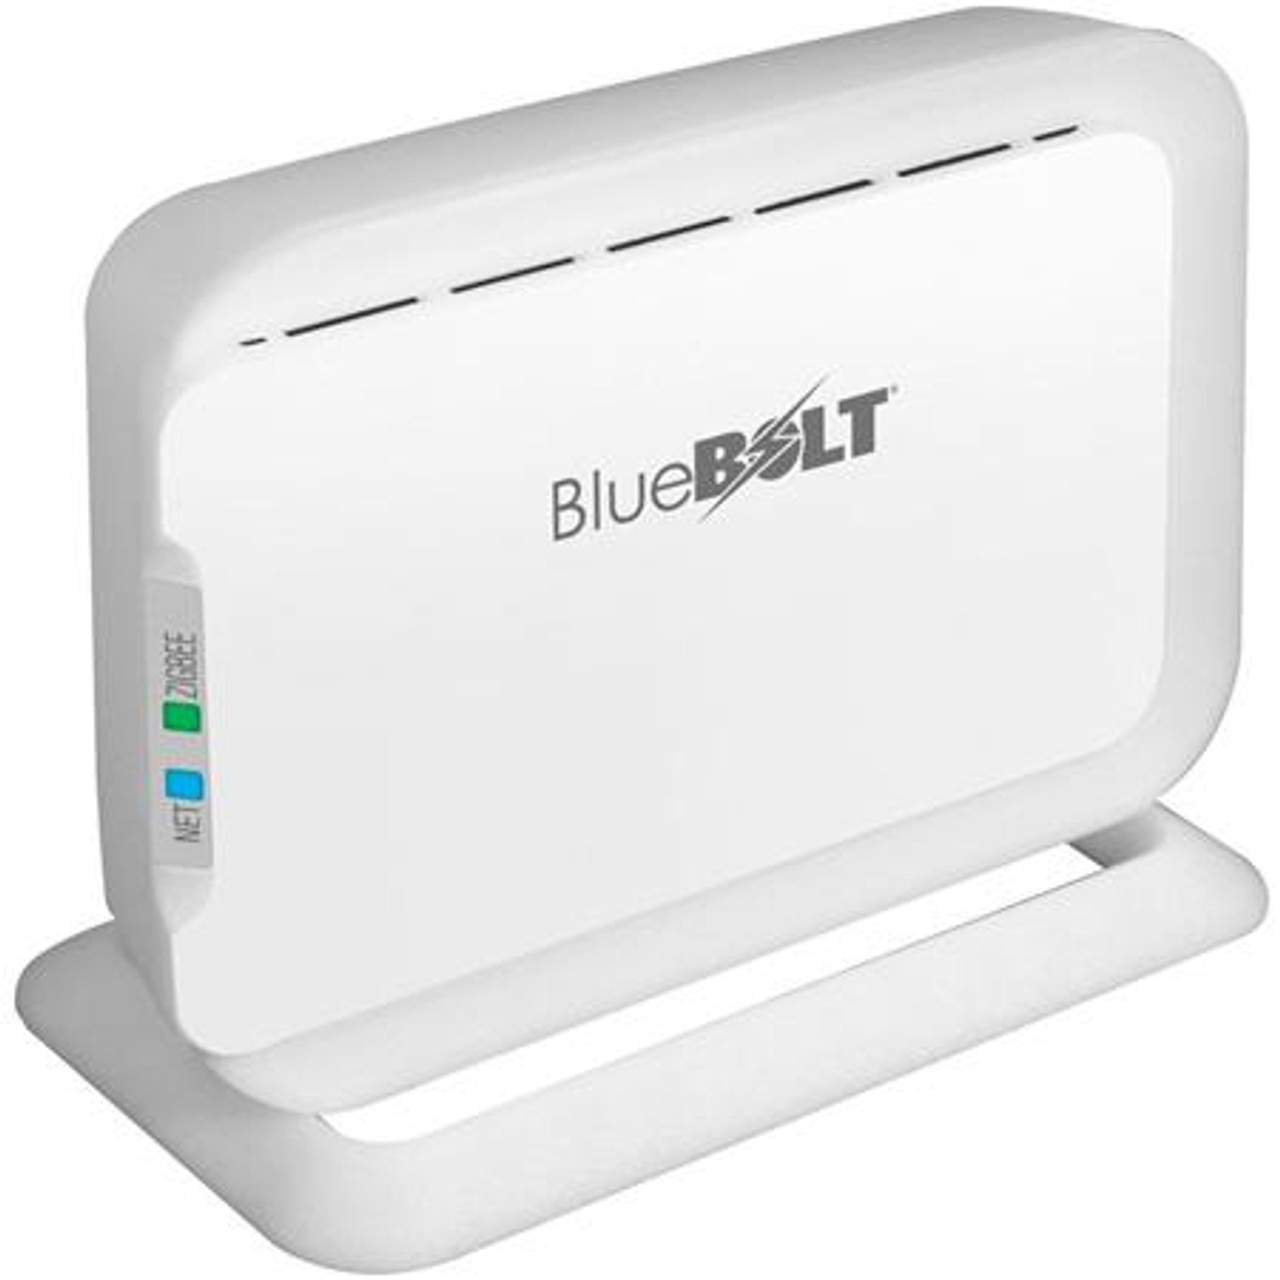 Furman Sound BlueBOLT Wireless Ethernet Gateway BB-ZB1